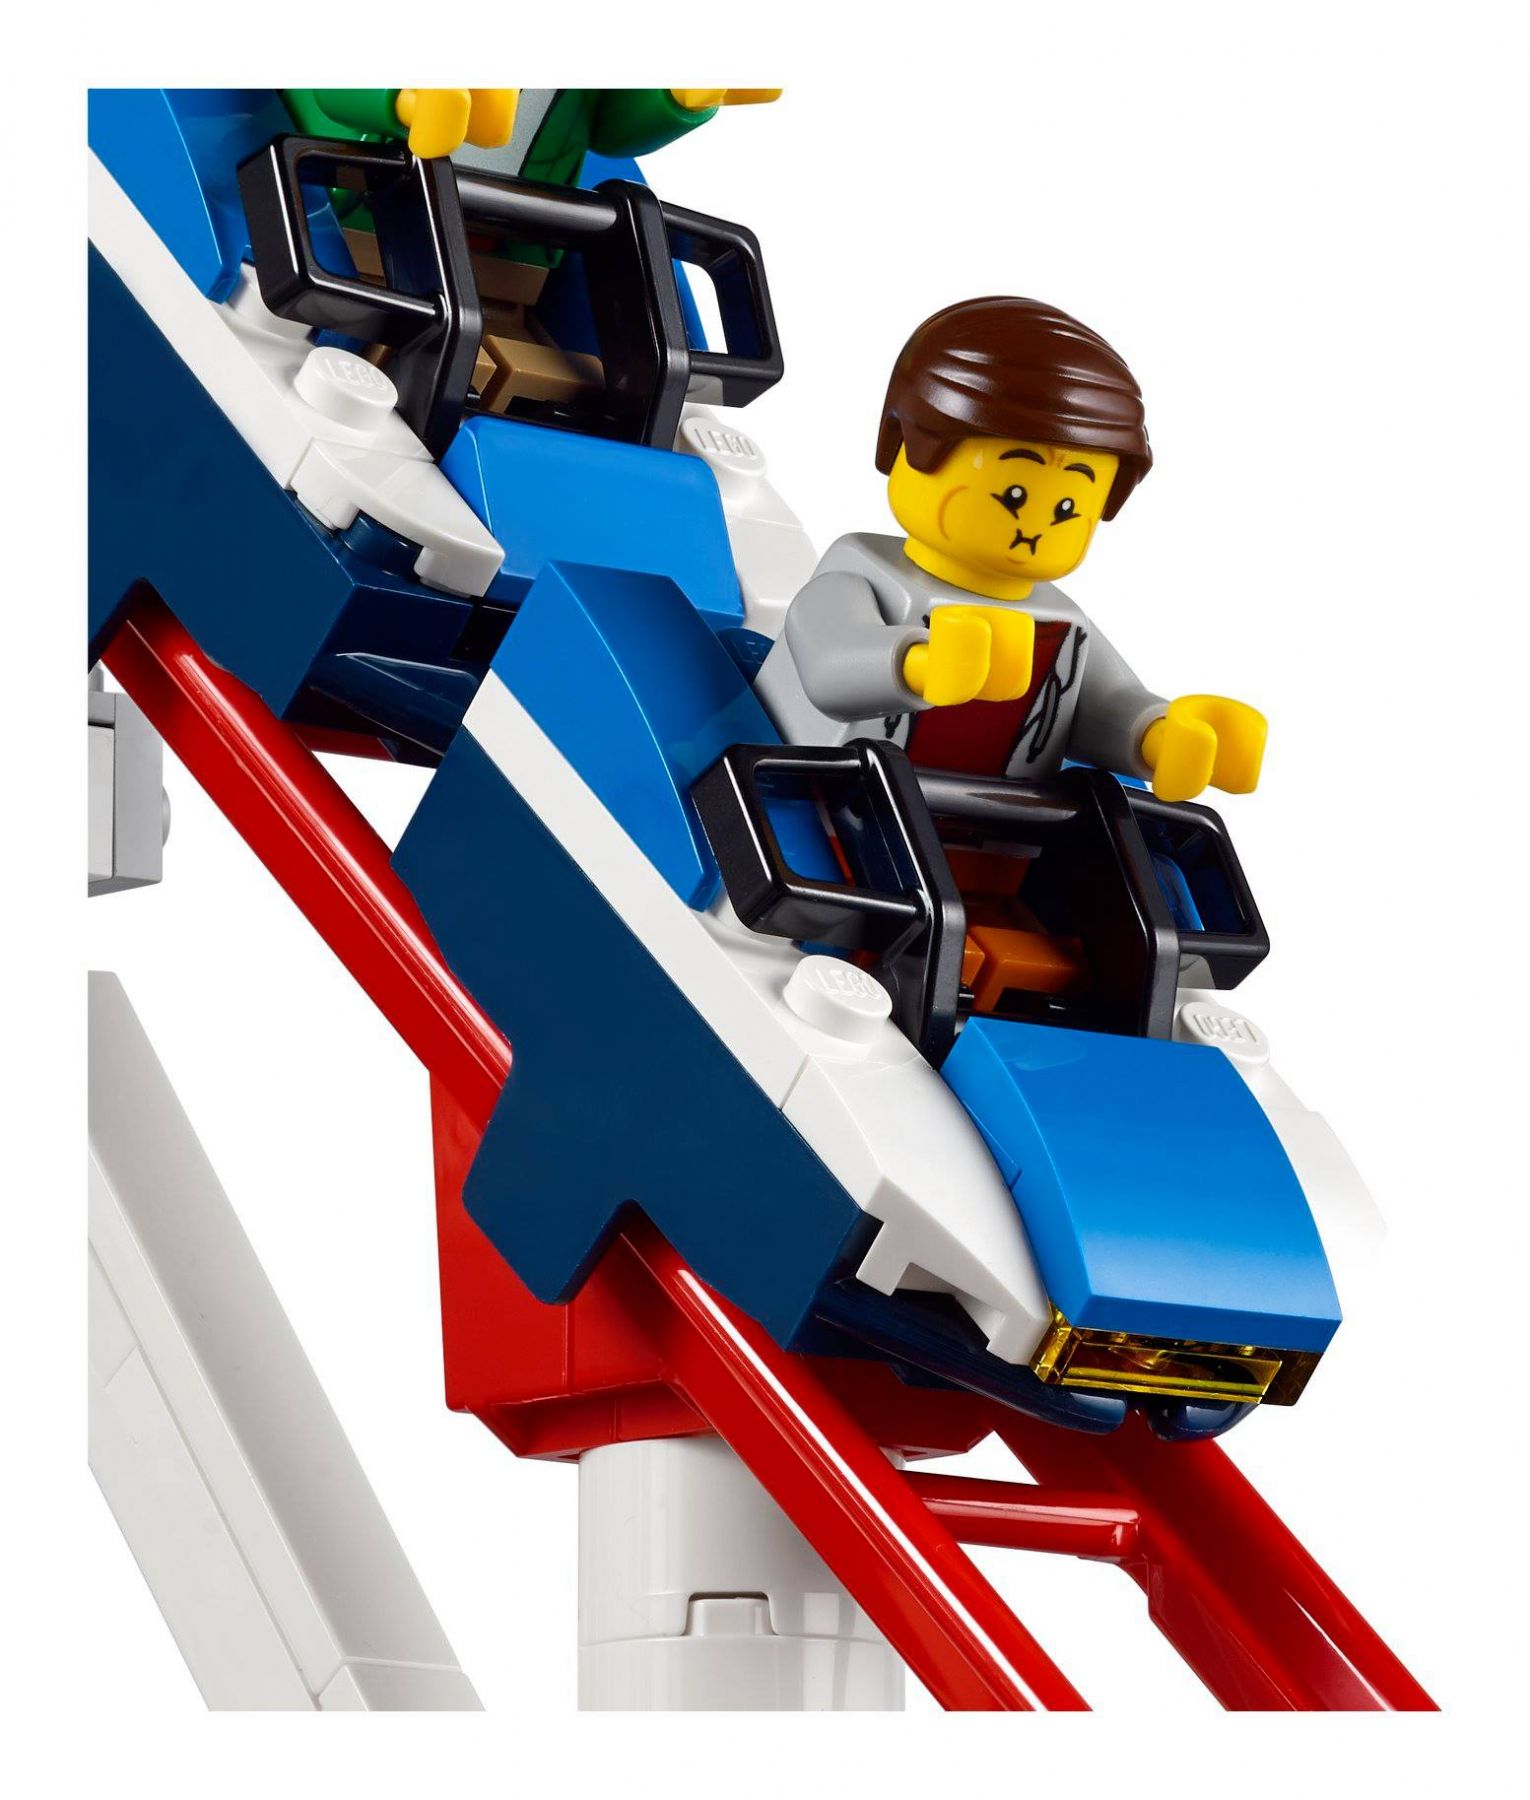 LEGO Advanced Models 10261 Achterbahn LEGO_Creator_Expert_10261_RollerCoaster_Achterbahn_img04.jpg